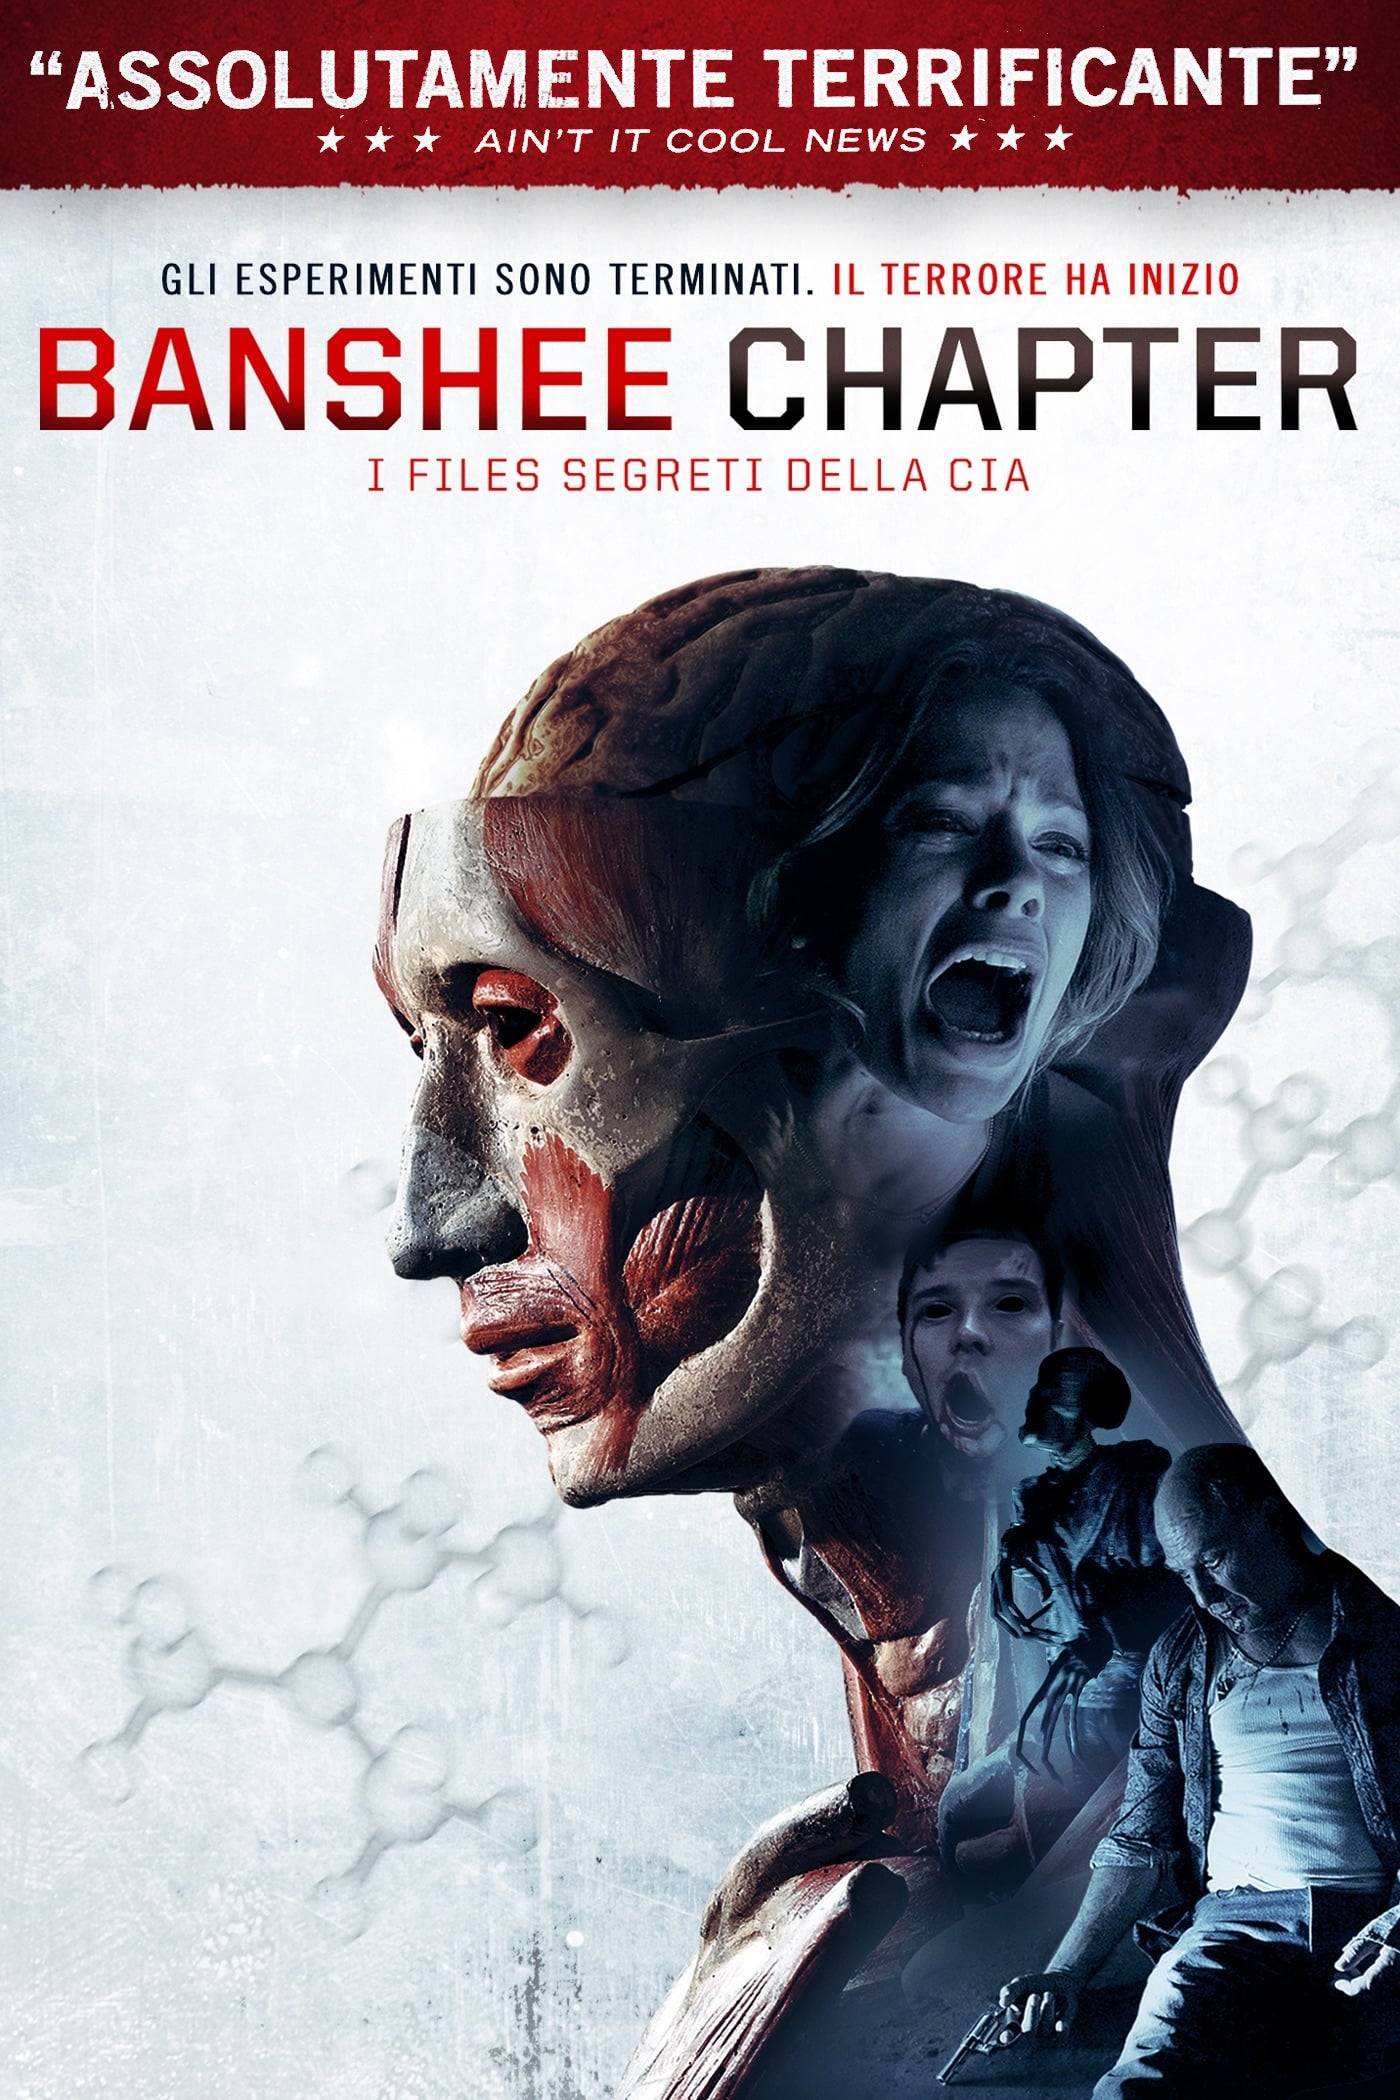 Banshee Chapter – I files segreti della Cia [HD] (2015)